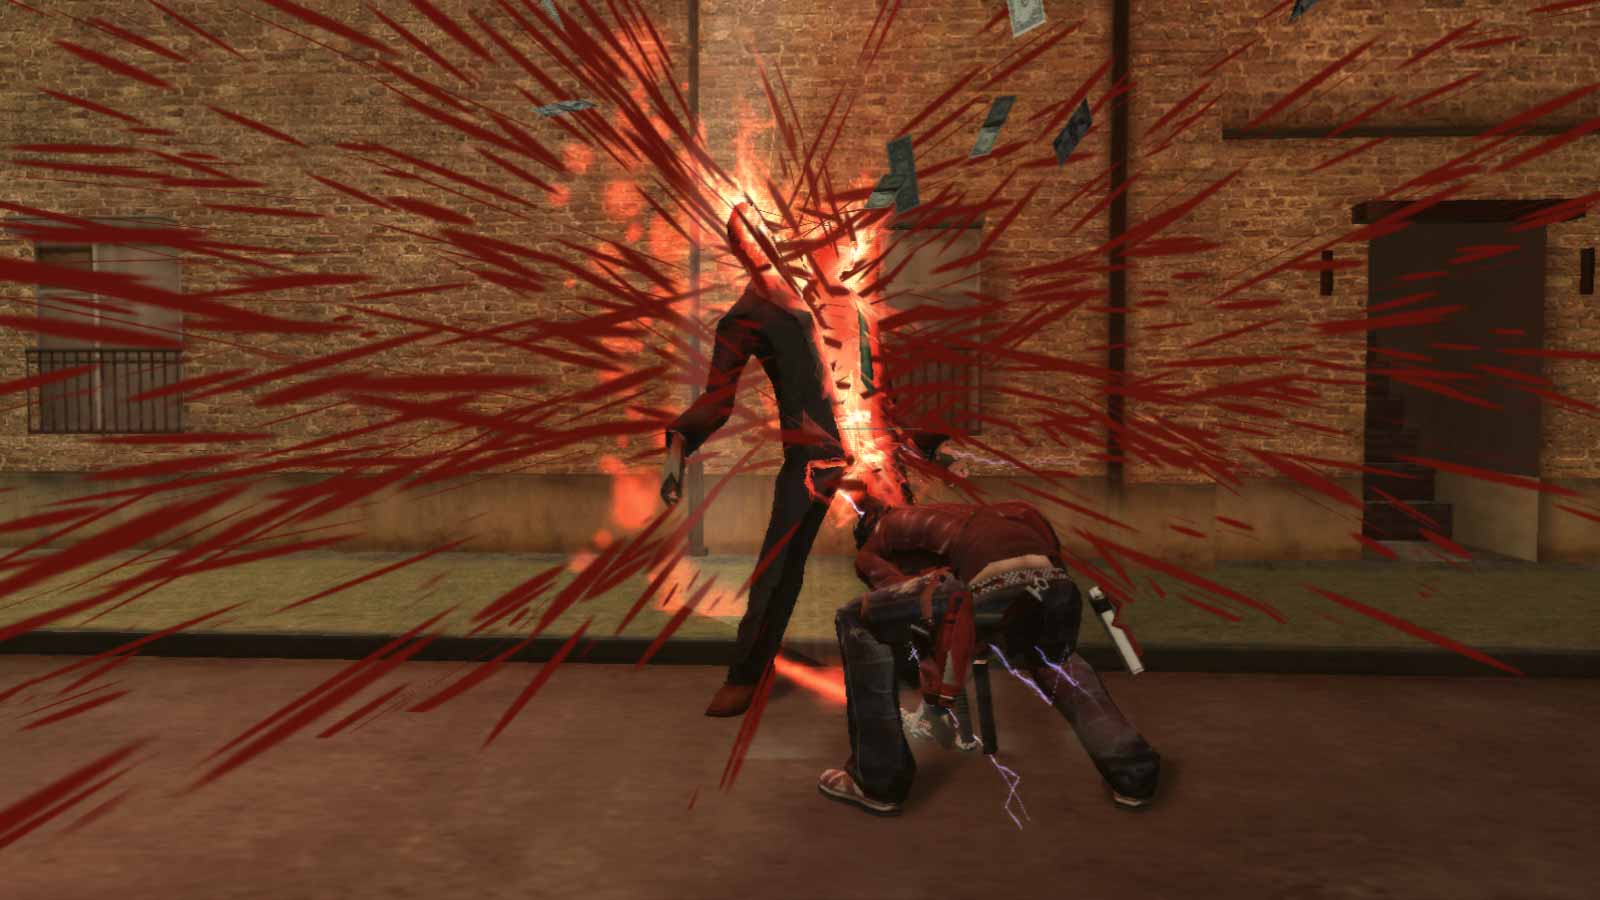 Una scena di un videogame violento